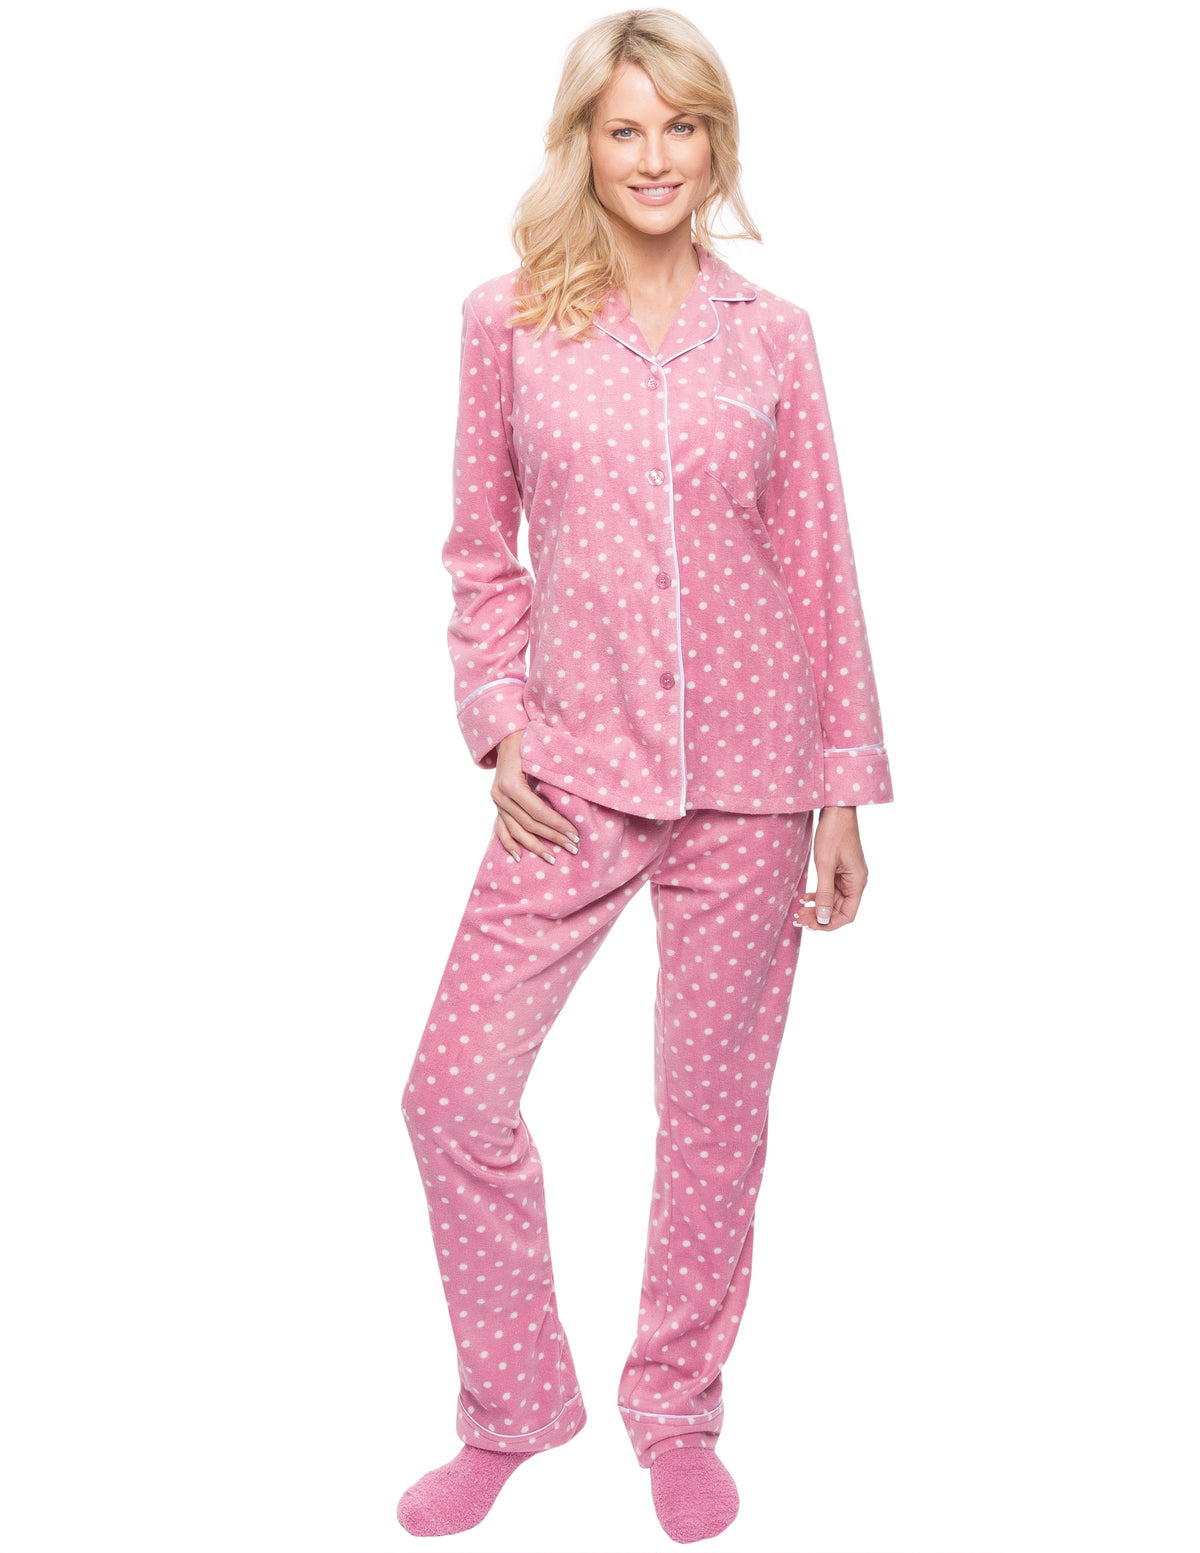 Womens Microfleece Pajama Sleepwear Set - Dots Diva Pink/White